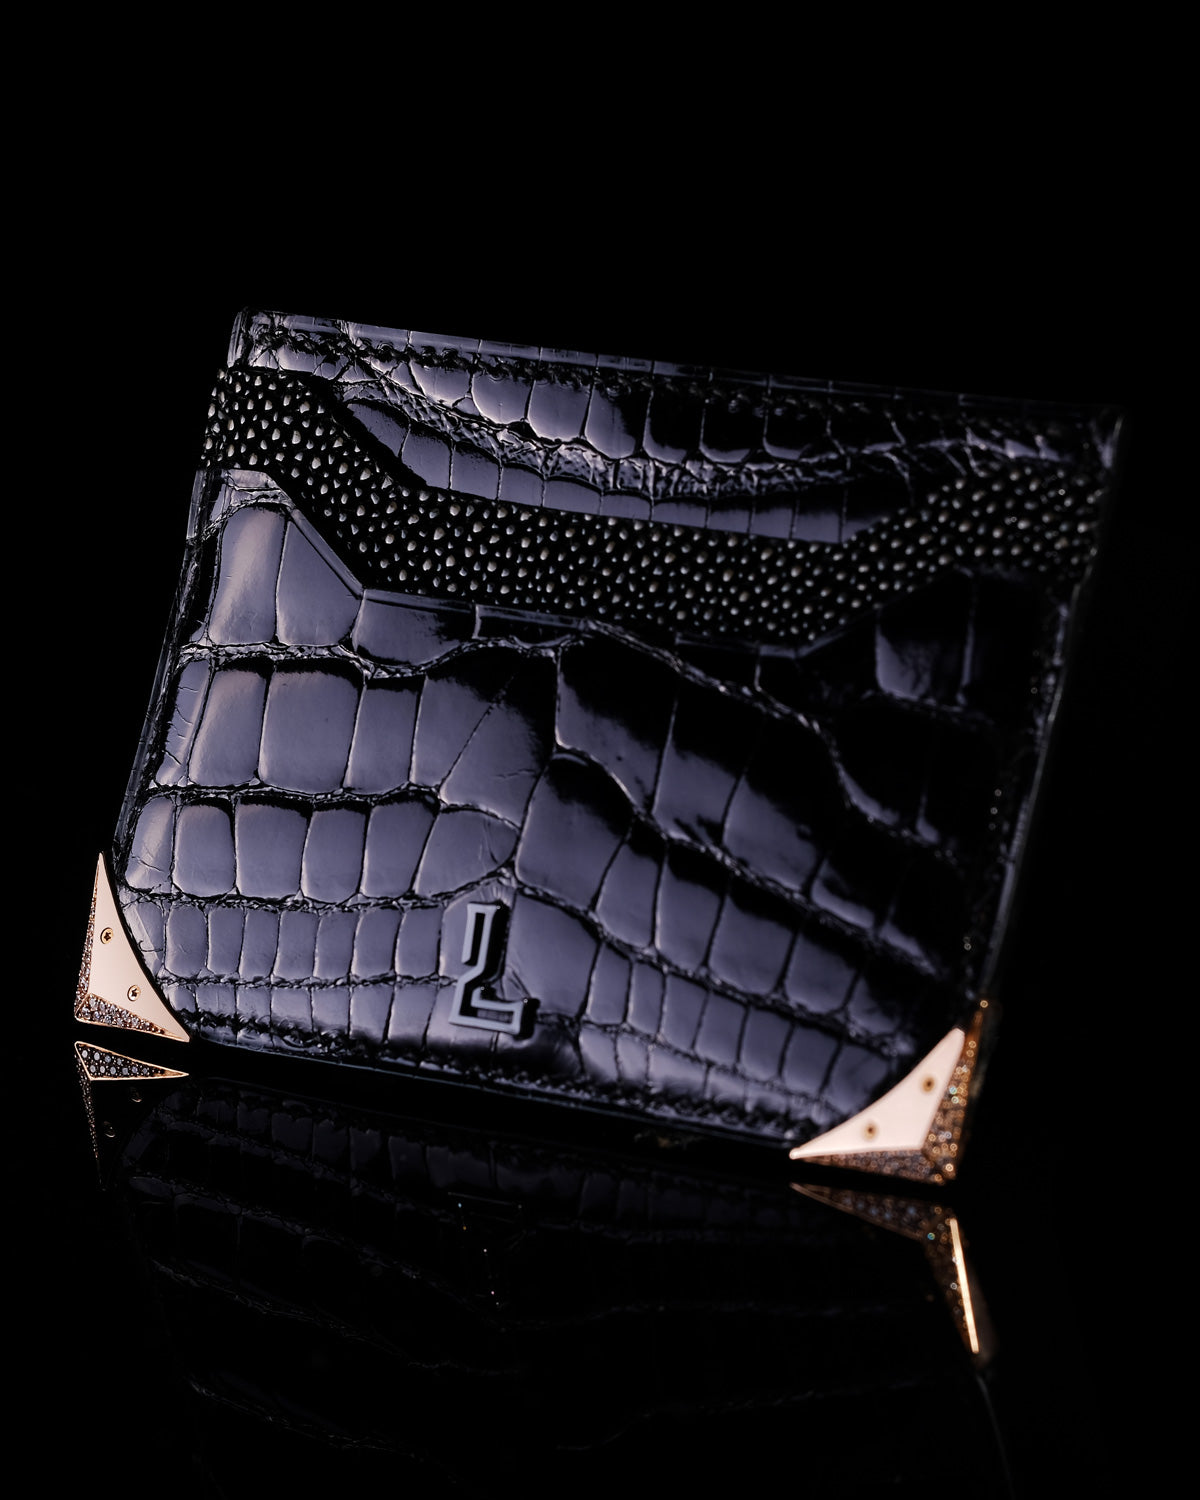 Source High quality exotic genuine lizard skin leather card holder